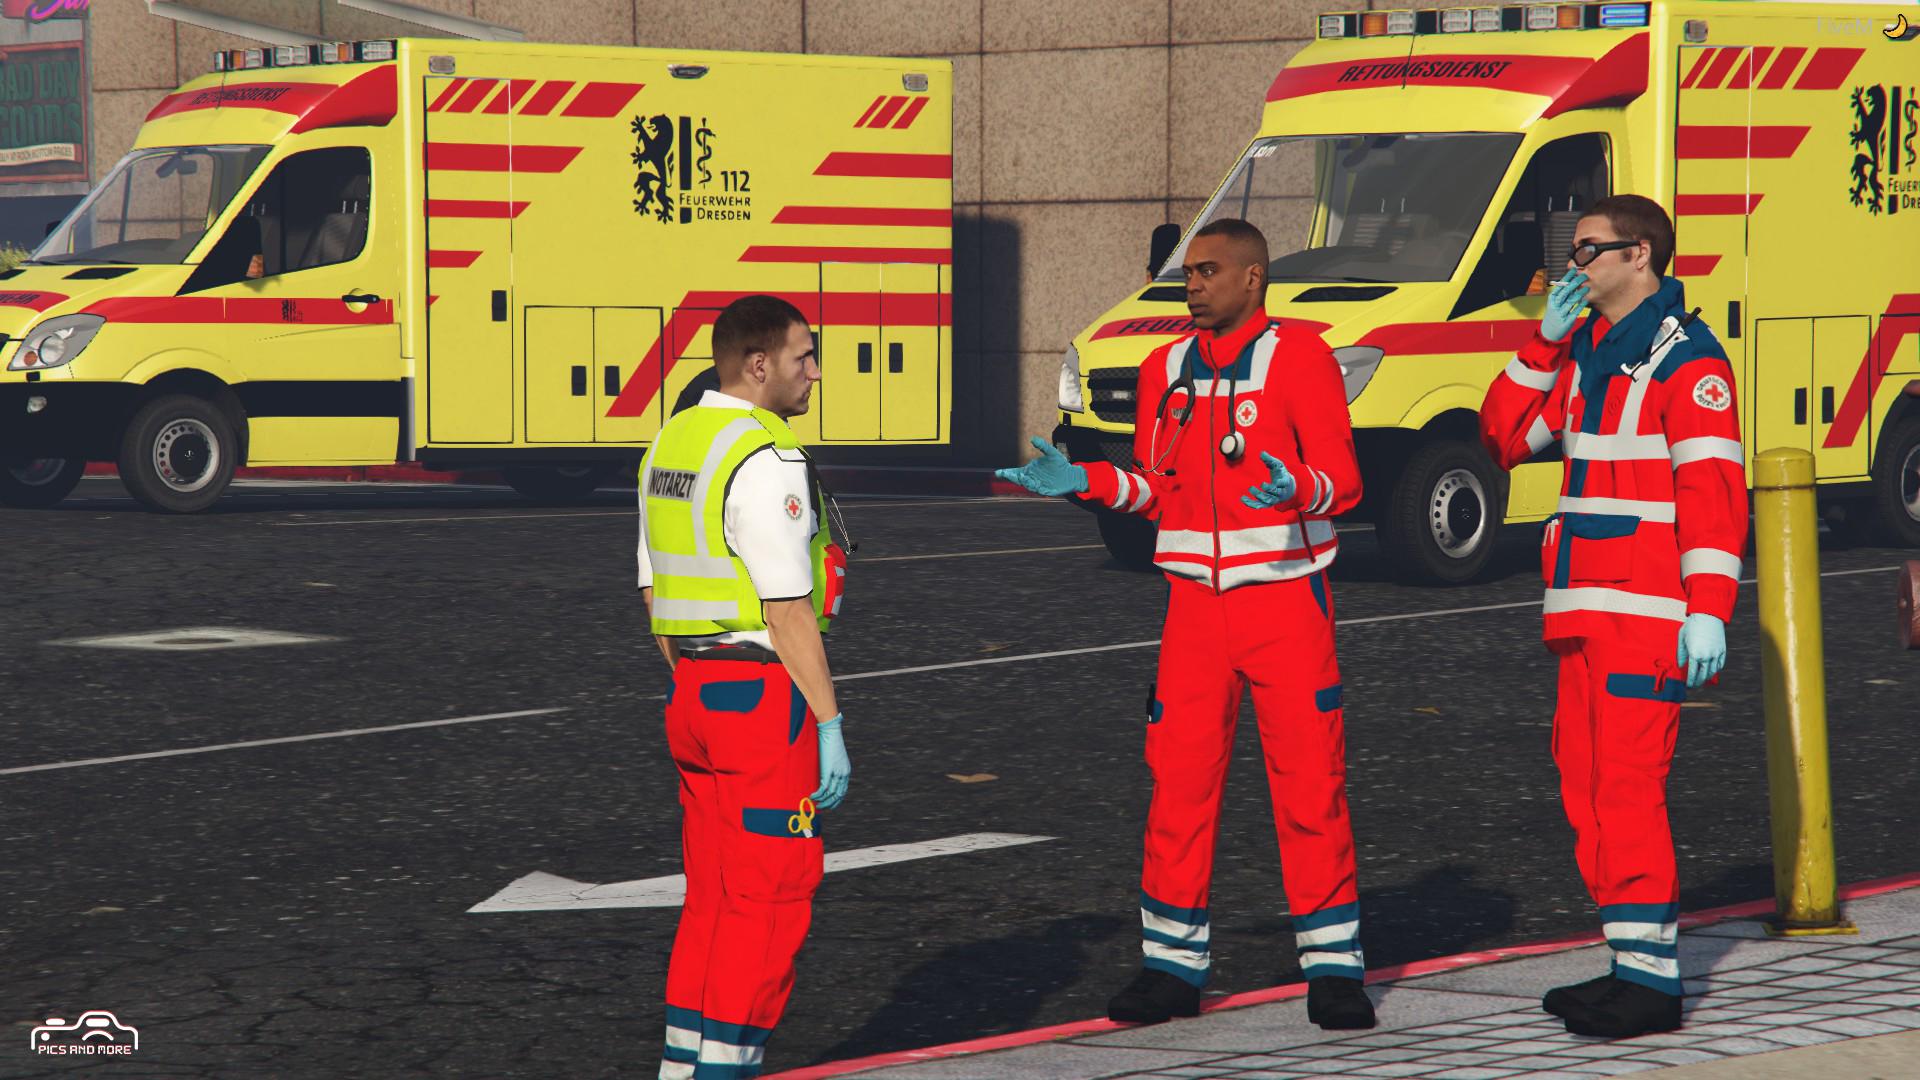 Real paramedics для gta 5